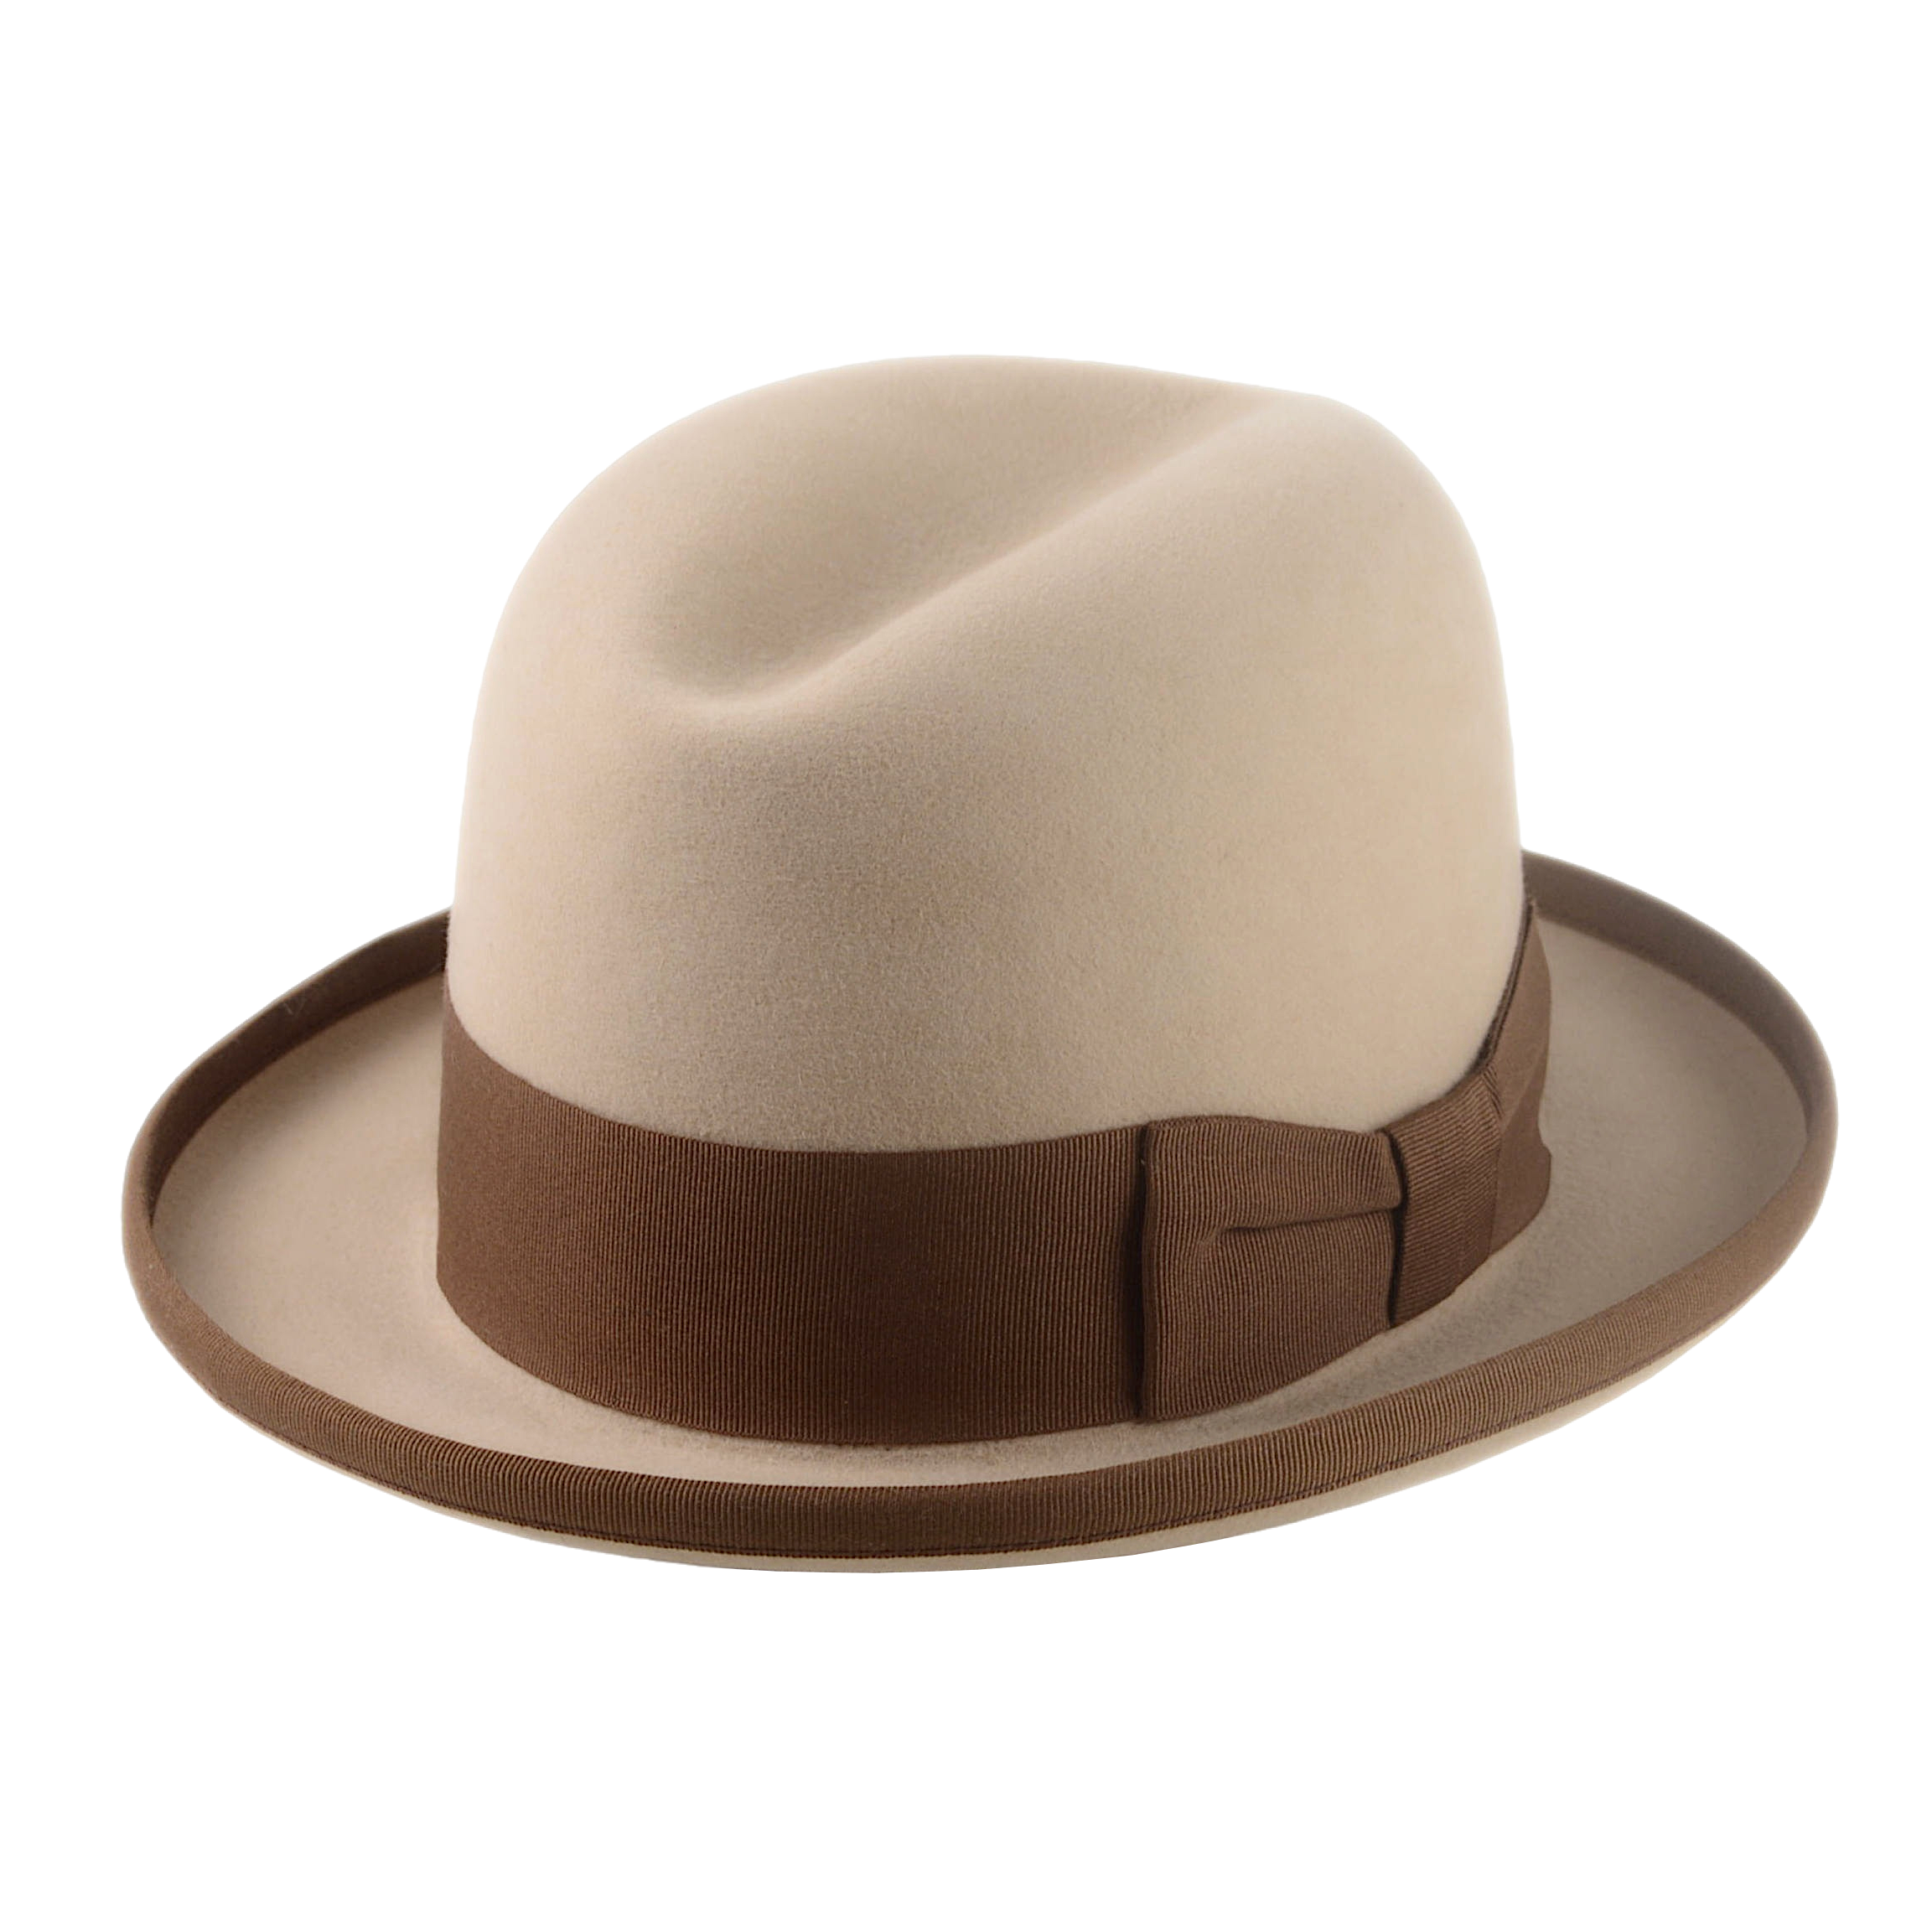 Formal Homburg Fedora Hat For Men in Premium Fur Felt